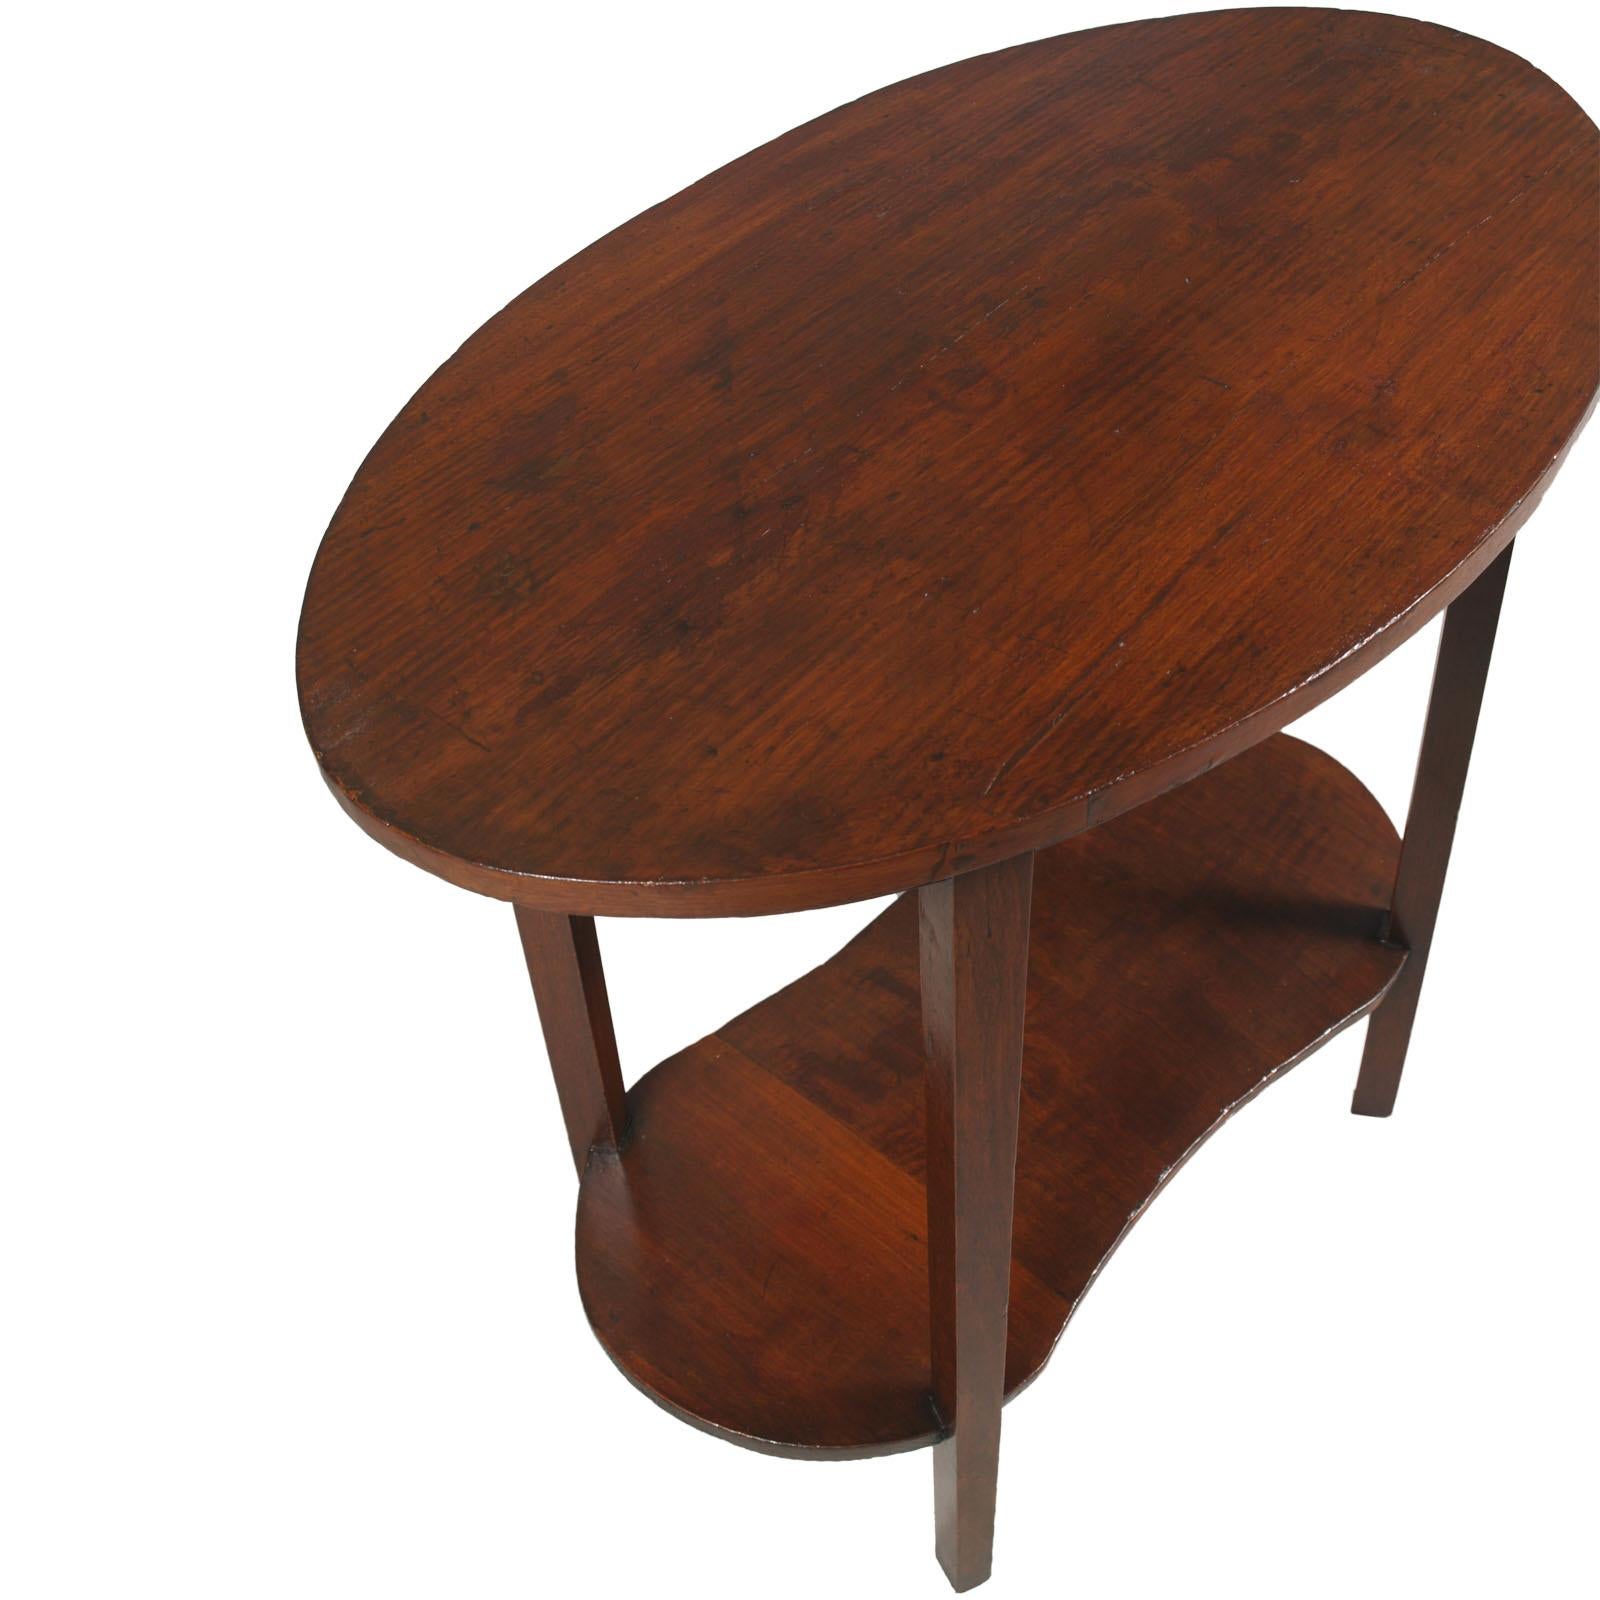 Walnut Early 20th Century Small Side Table, Art Nouveau, Wienner Werkstatte manner For Sale